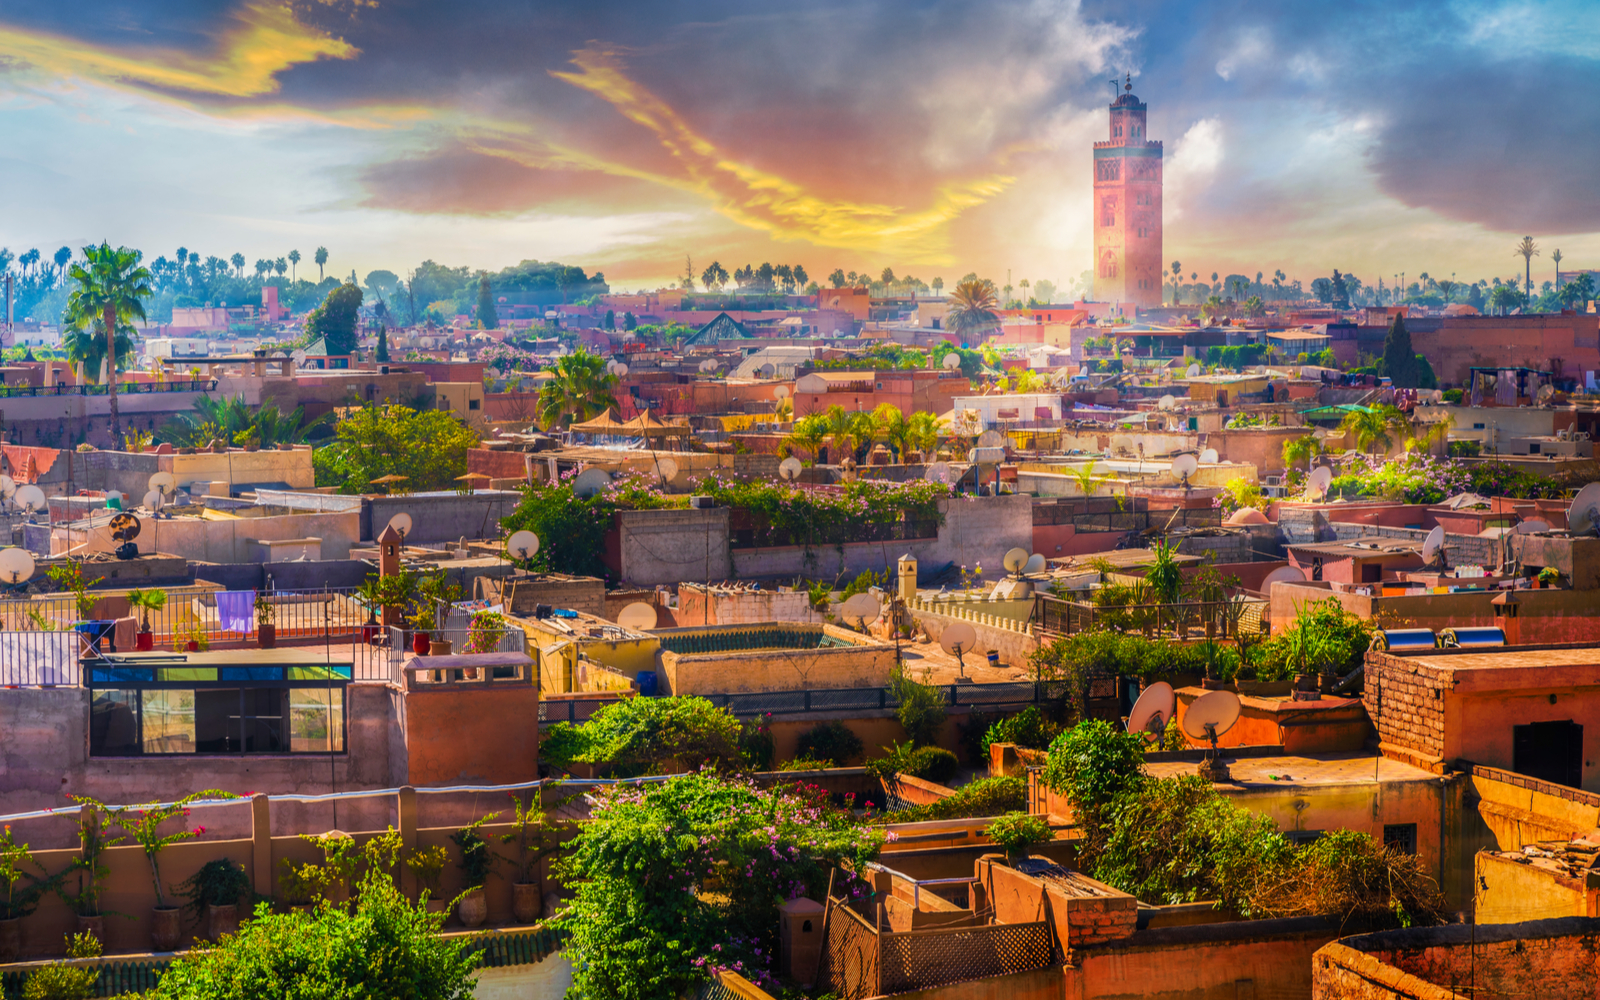 Is Morocco Safe? | Travel Tips & Safety Concerns